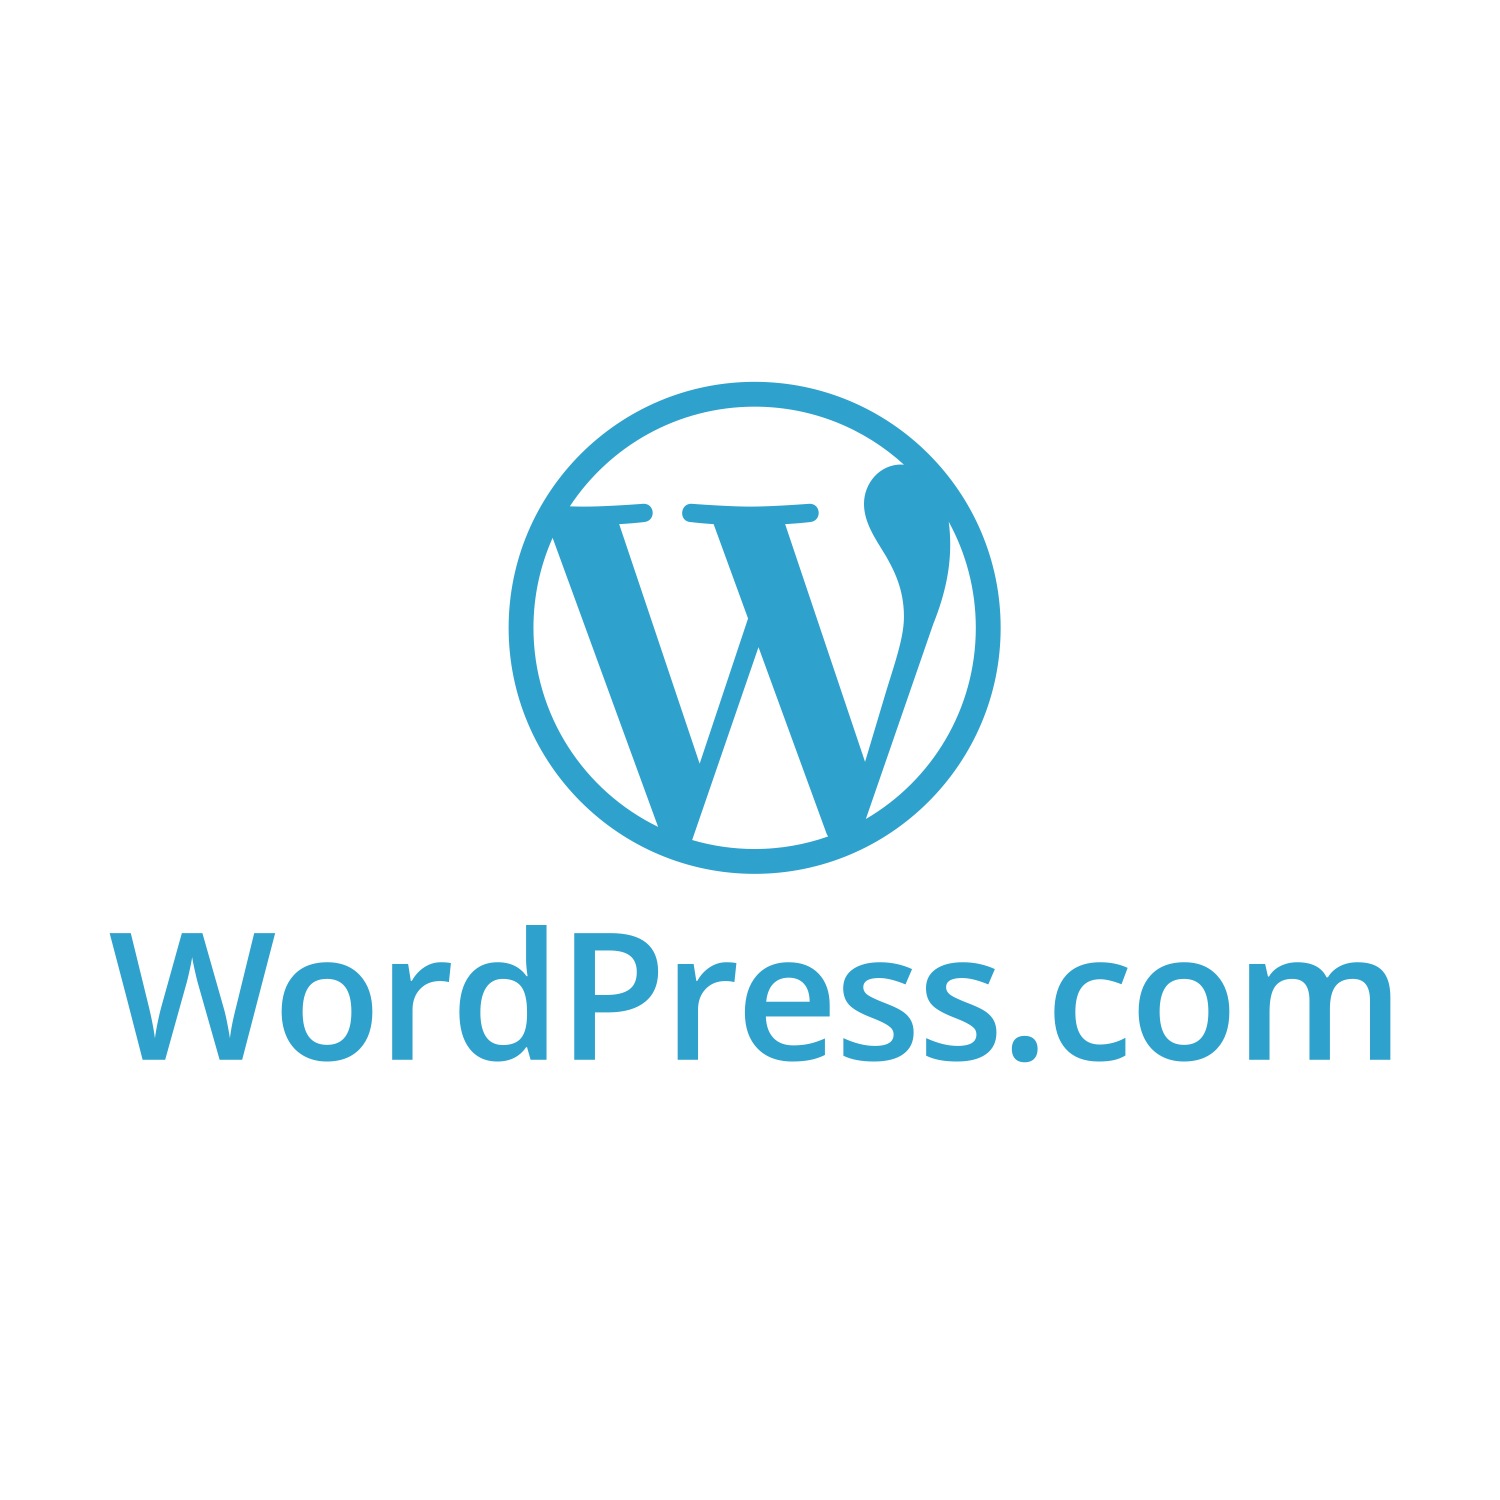 Wordpress описание